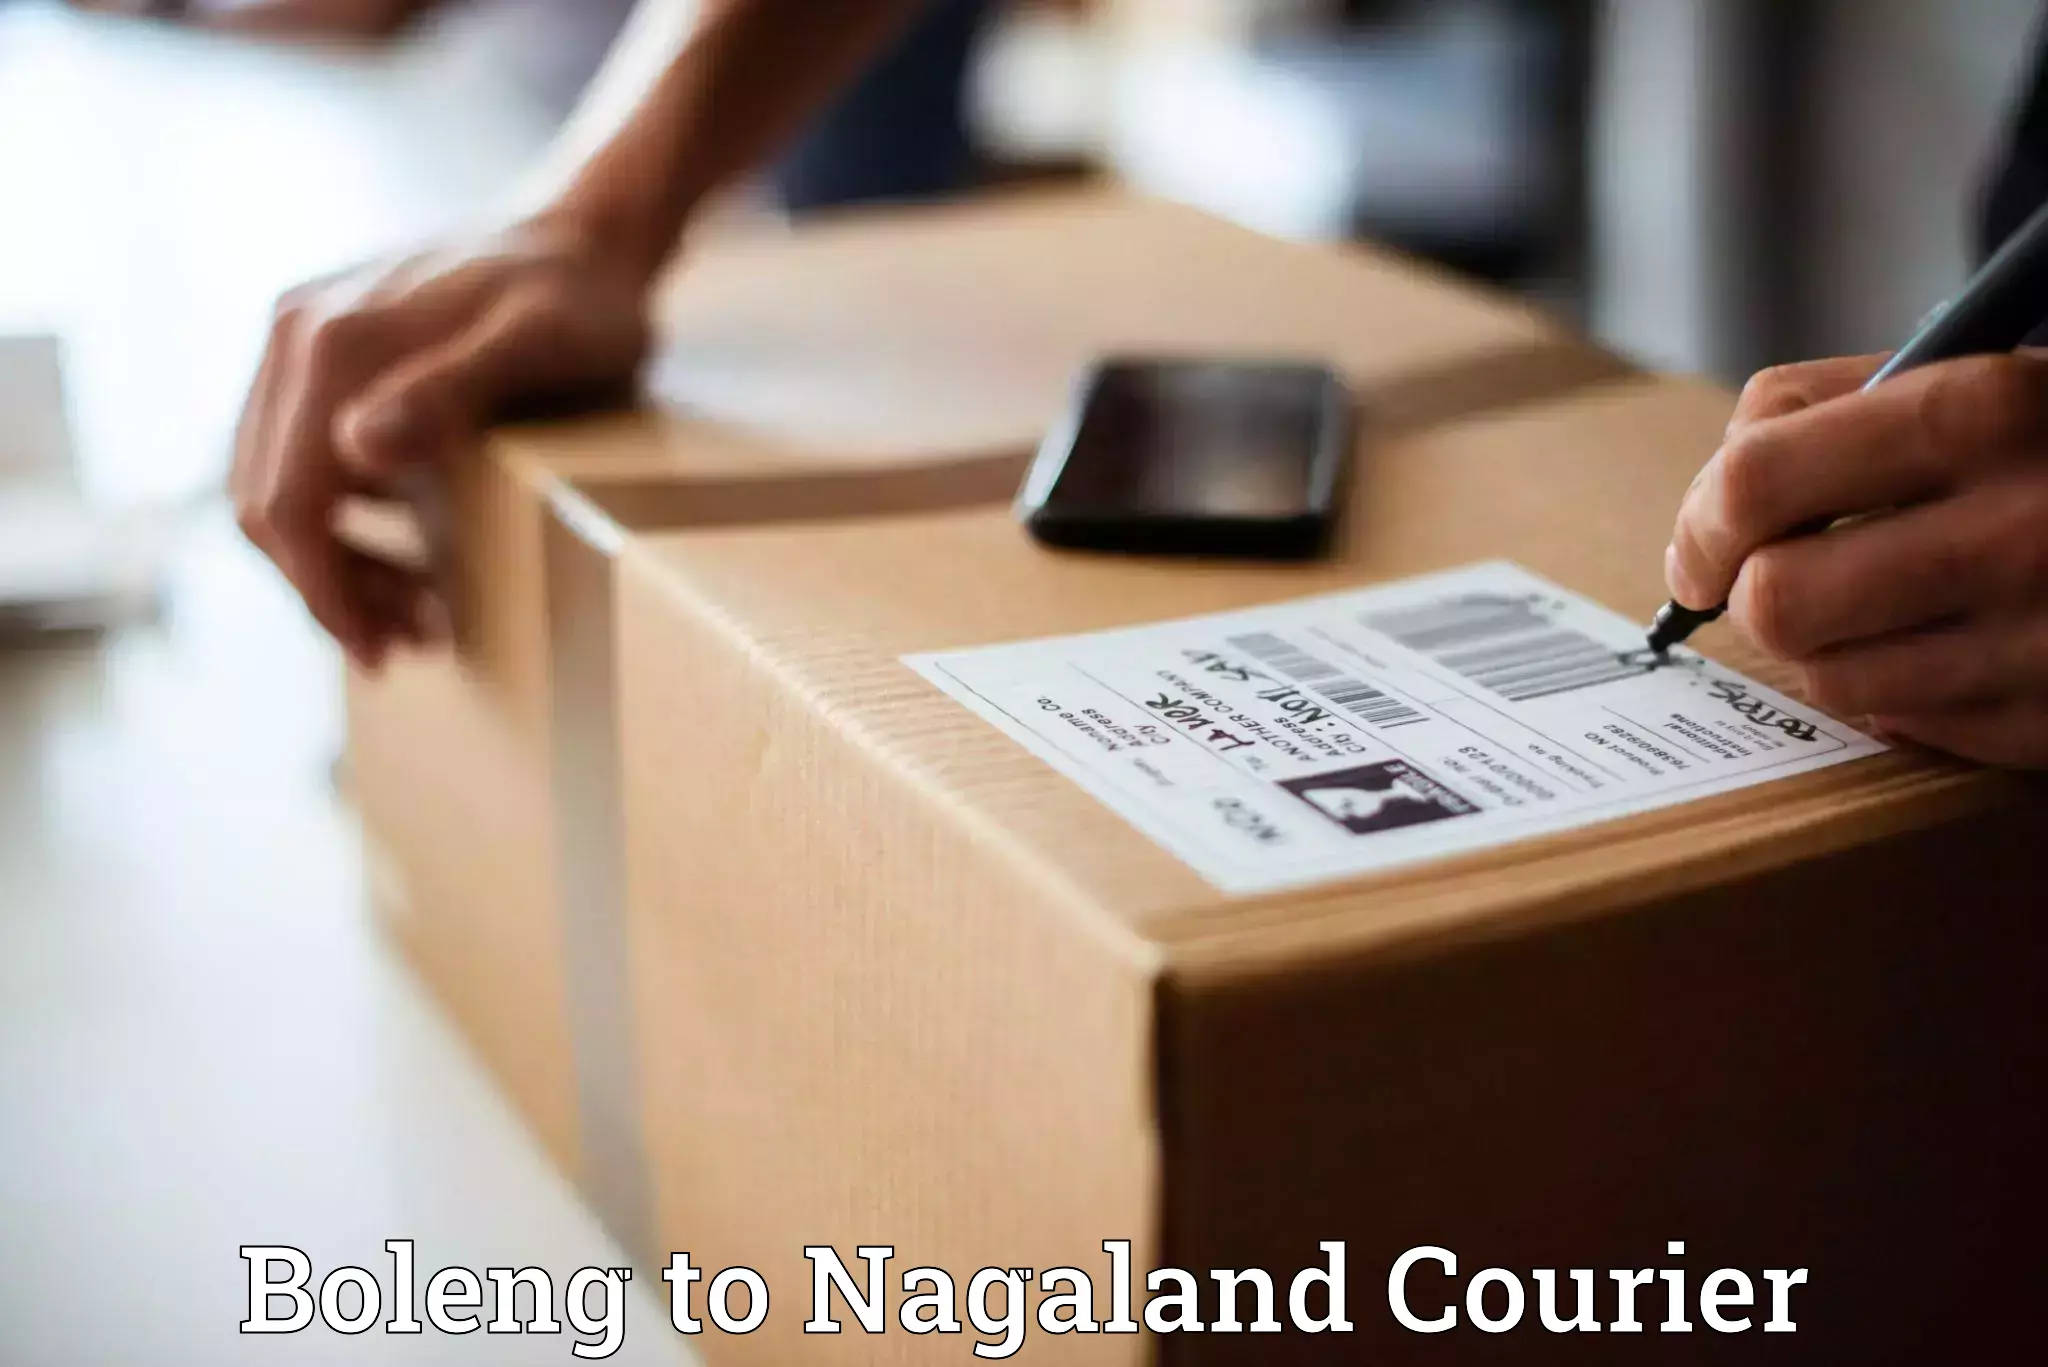 Speedy delivery service Boleng to Nagaland